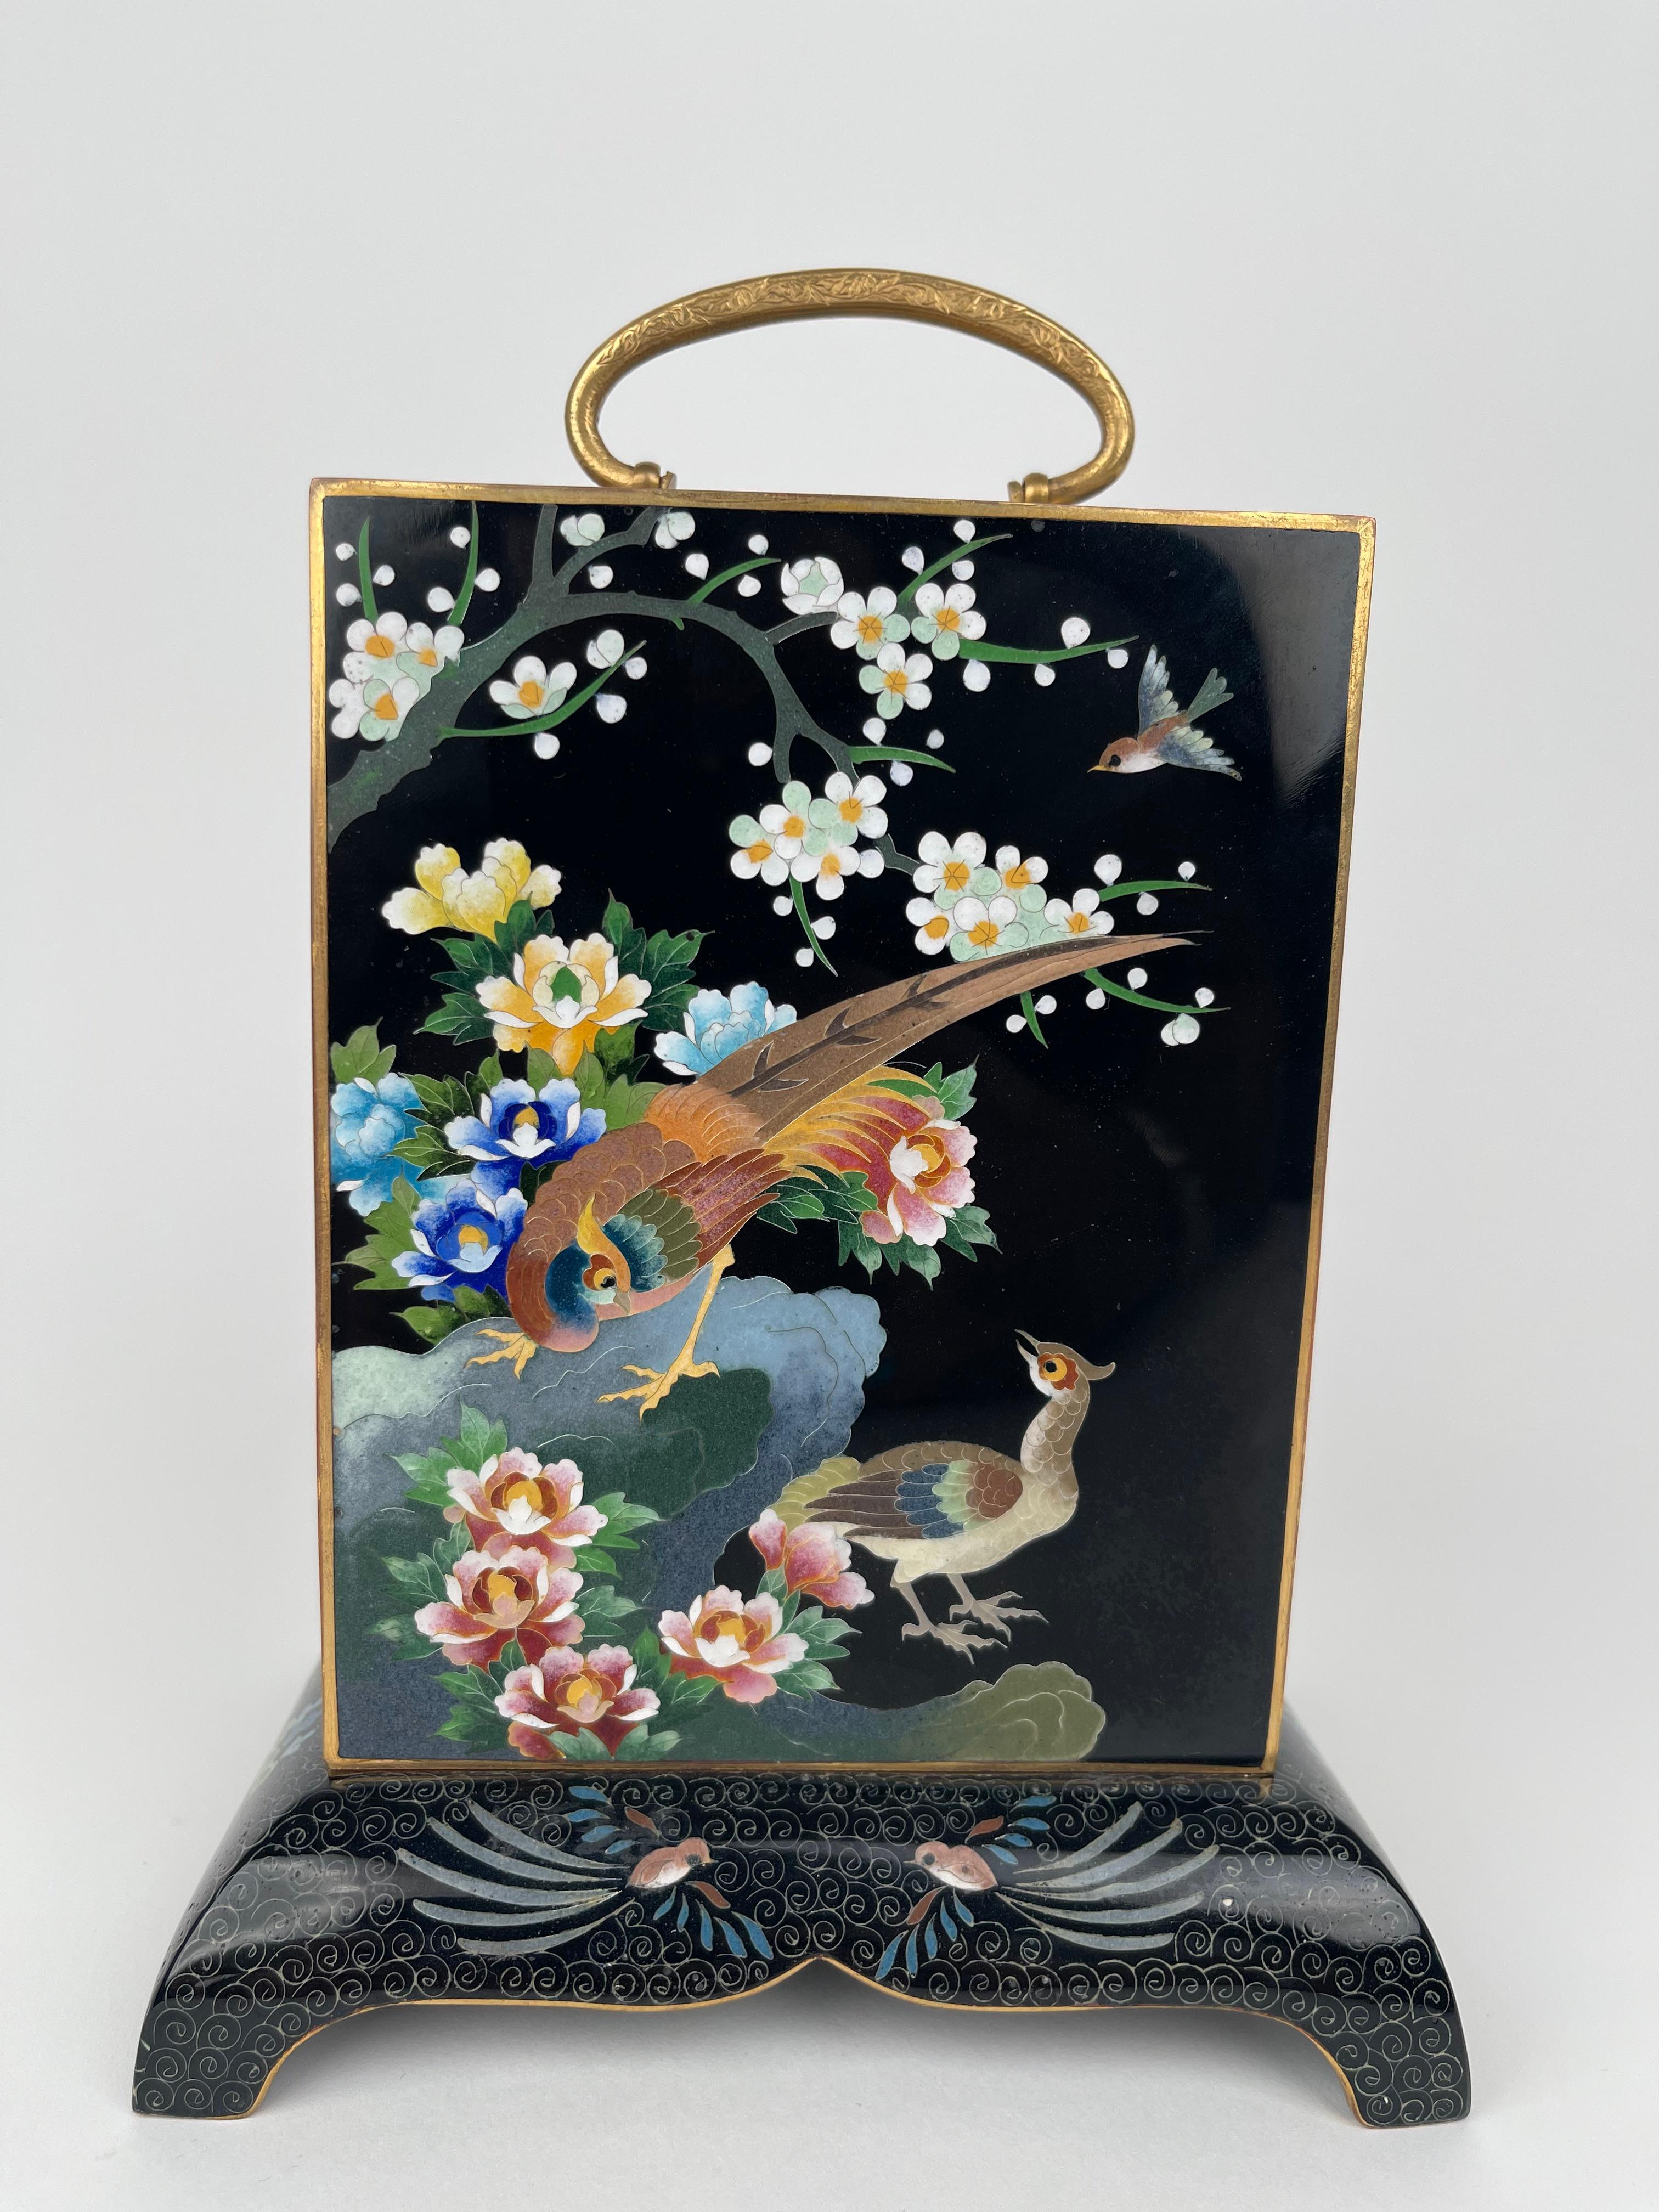 Hand-Painted Meiji Gilt Bronze & Cloisonné Enamel Musical Jewelry Box, Japan, circa 1900